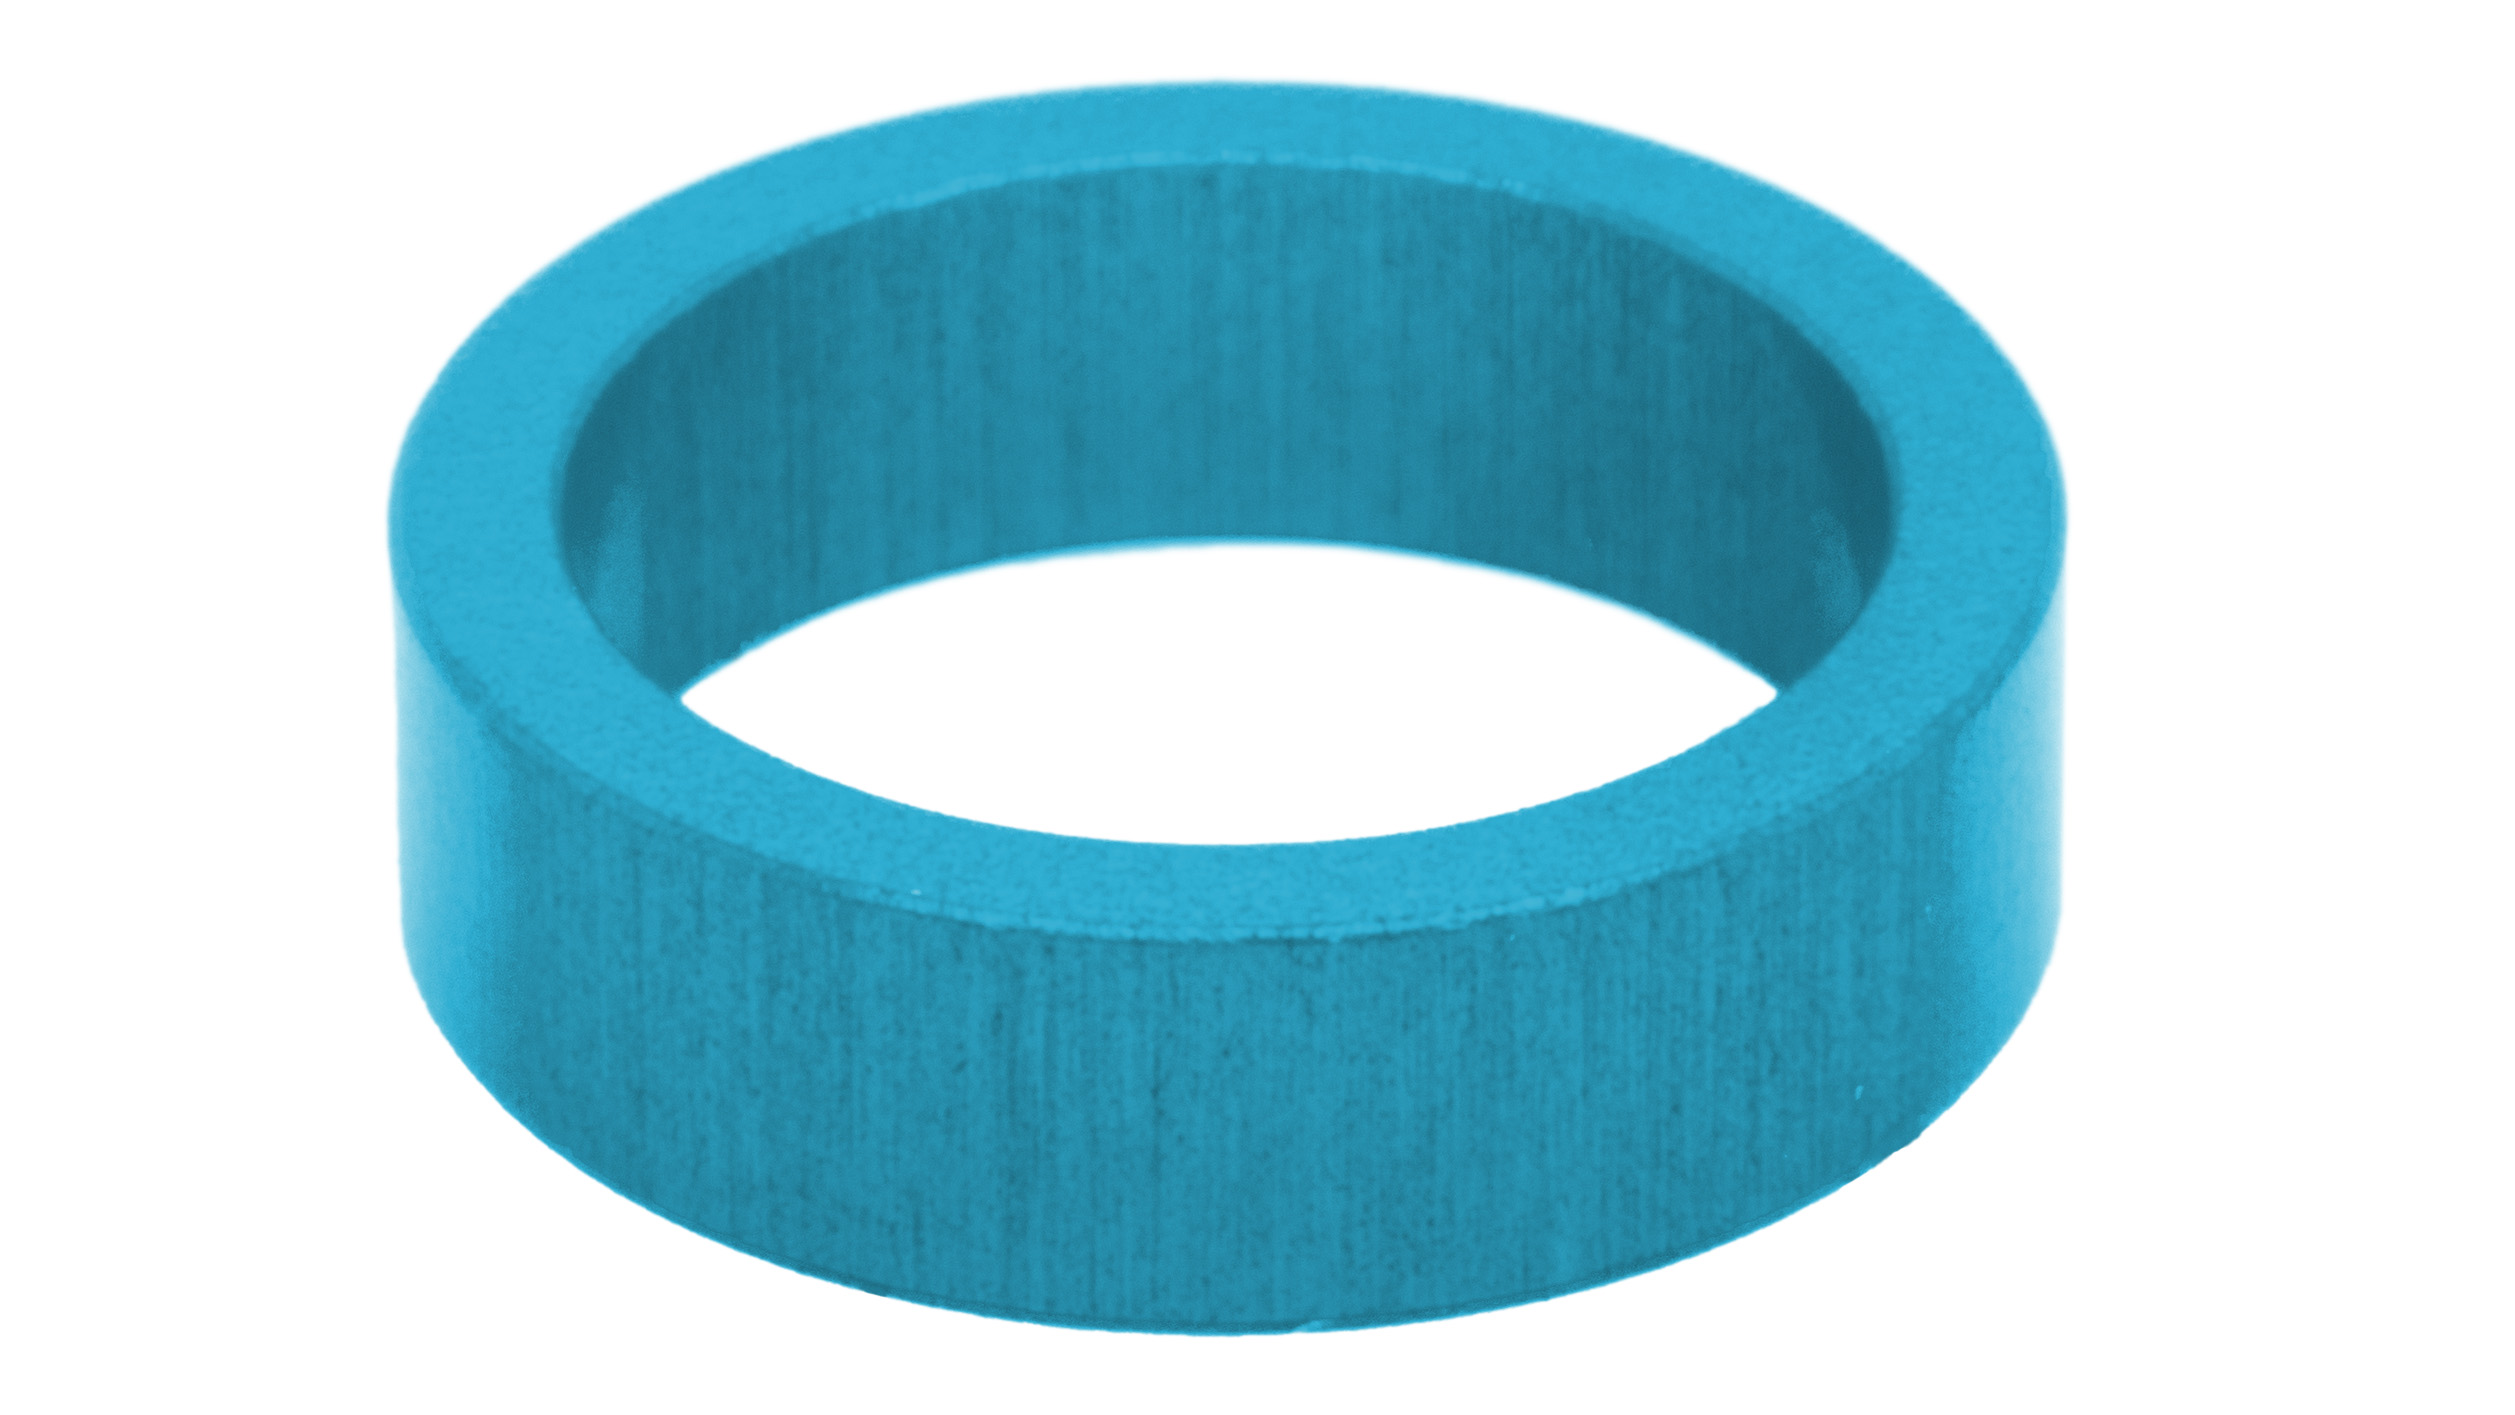 Identifikationsring, blau, für Petitpierre TSE, Klinge 1,5 mm